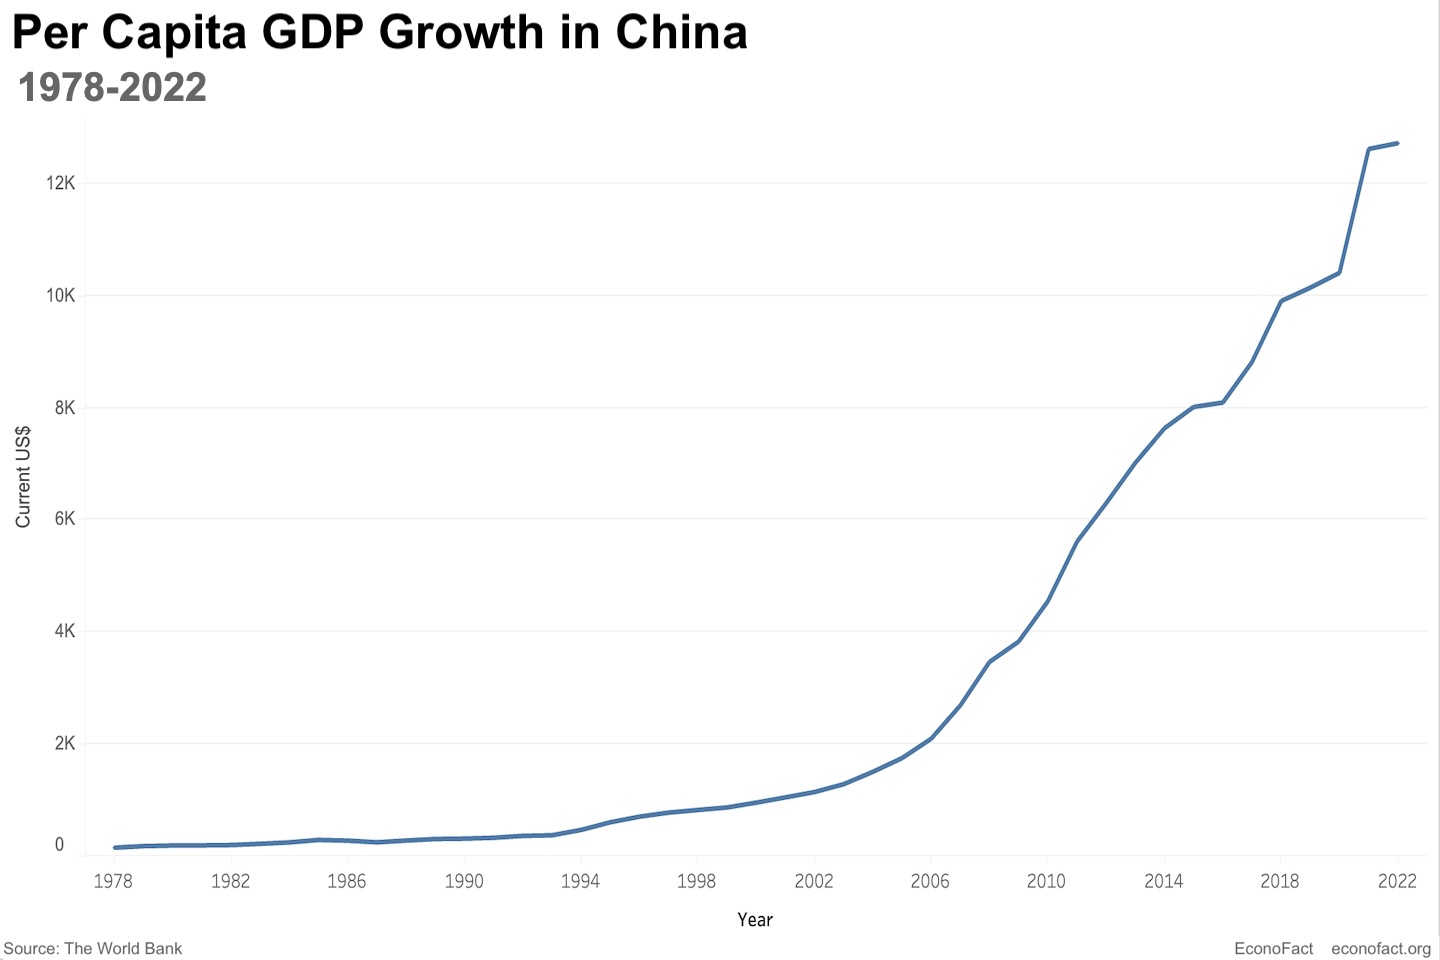 Per capita GDP growth in China - 1978-2022